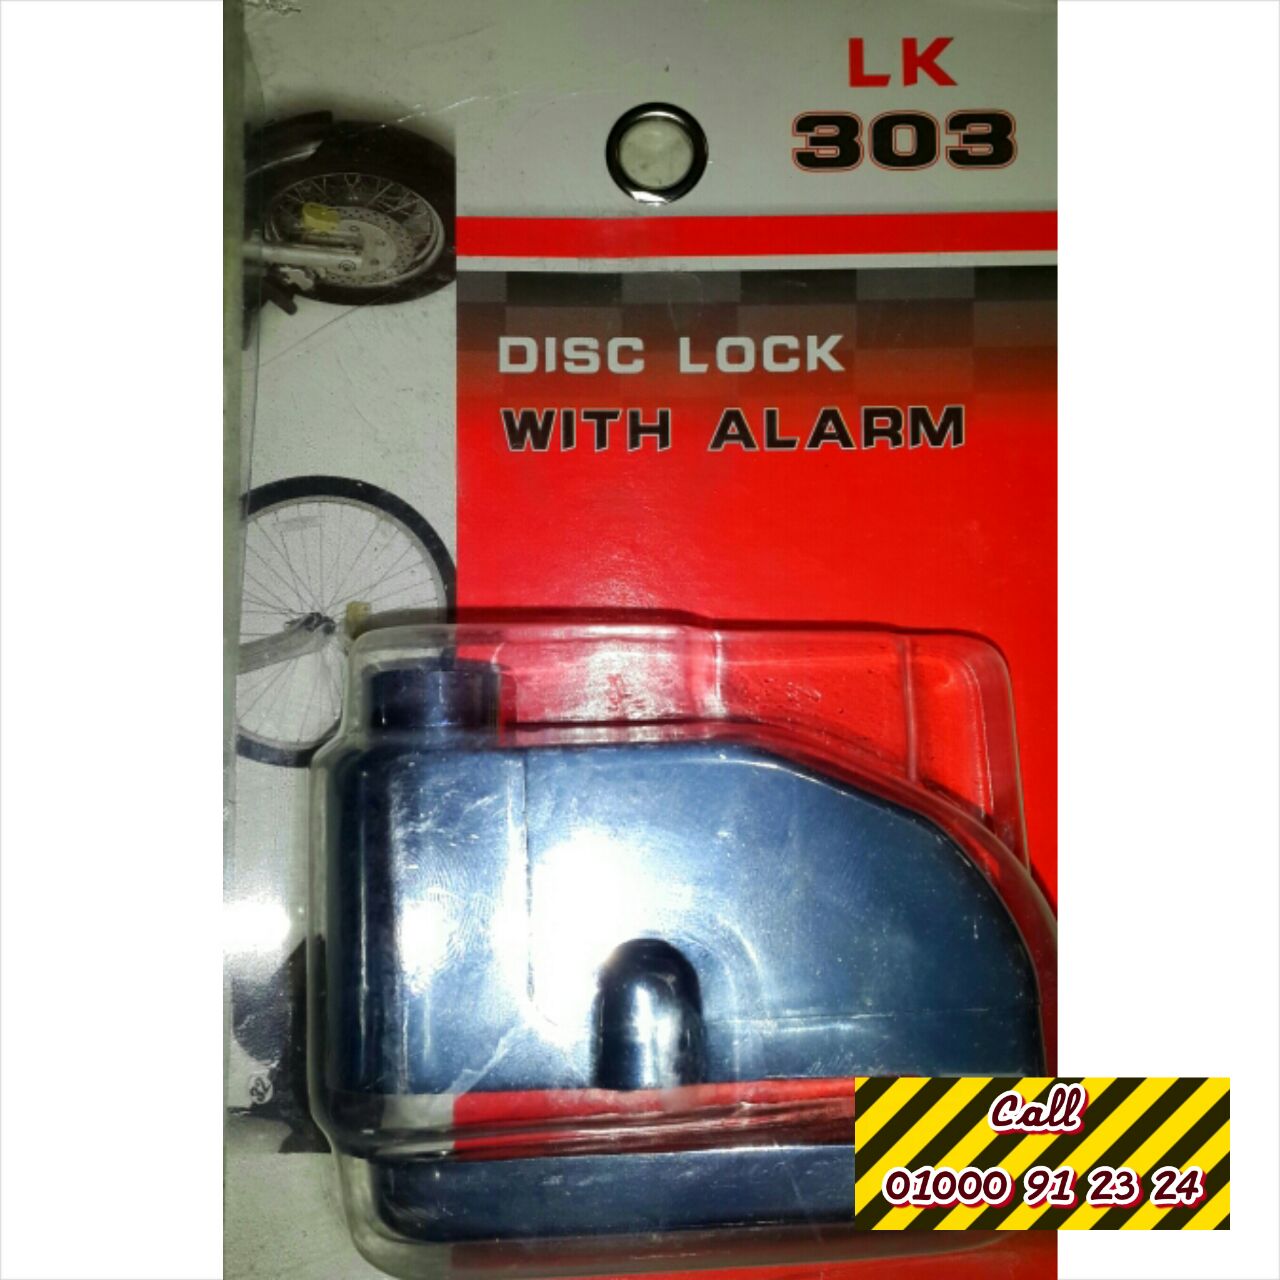 LK 303 -  Disc Lock with Alarm   -   